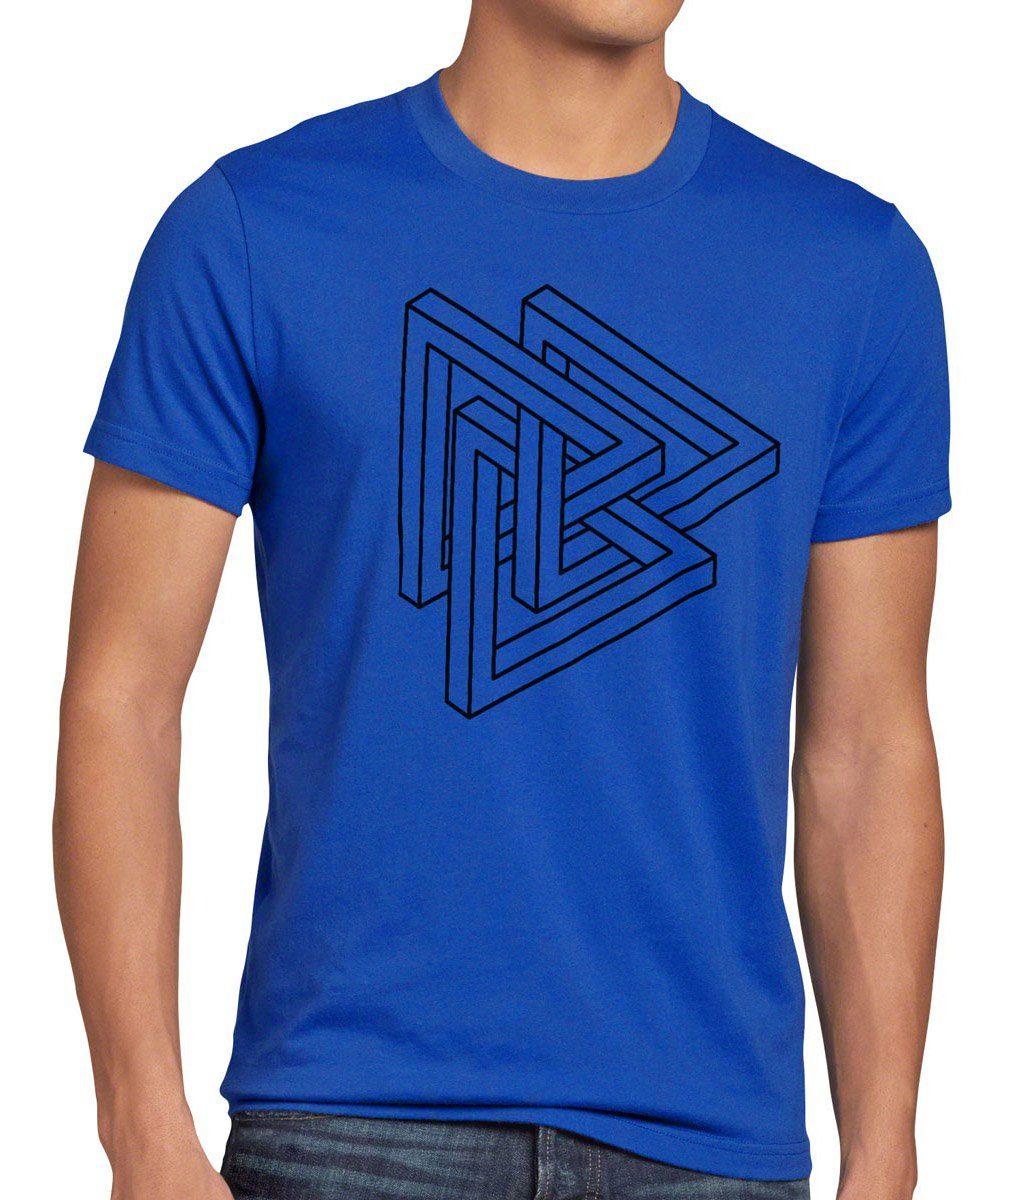 style3 Print-Shirt Herren T-Shirt Big Bang Escher Cooper Sheldon geo Dreieck Penrose Theory Würfel blau